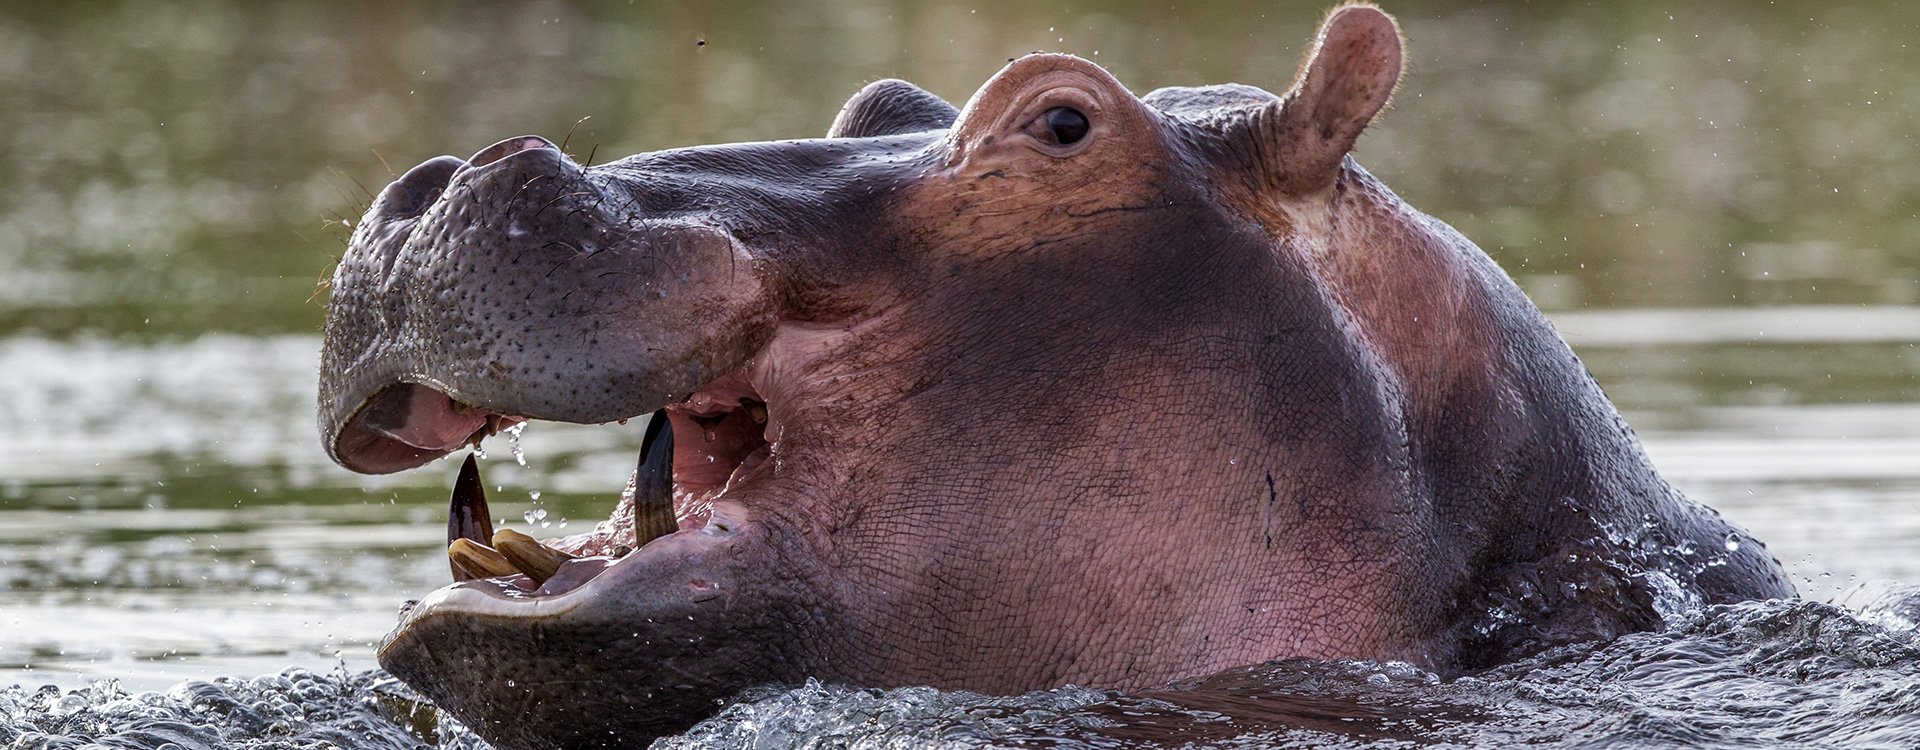 Botswana_Okavango_Hippo